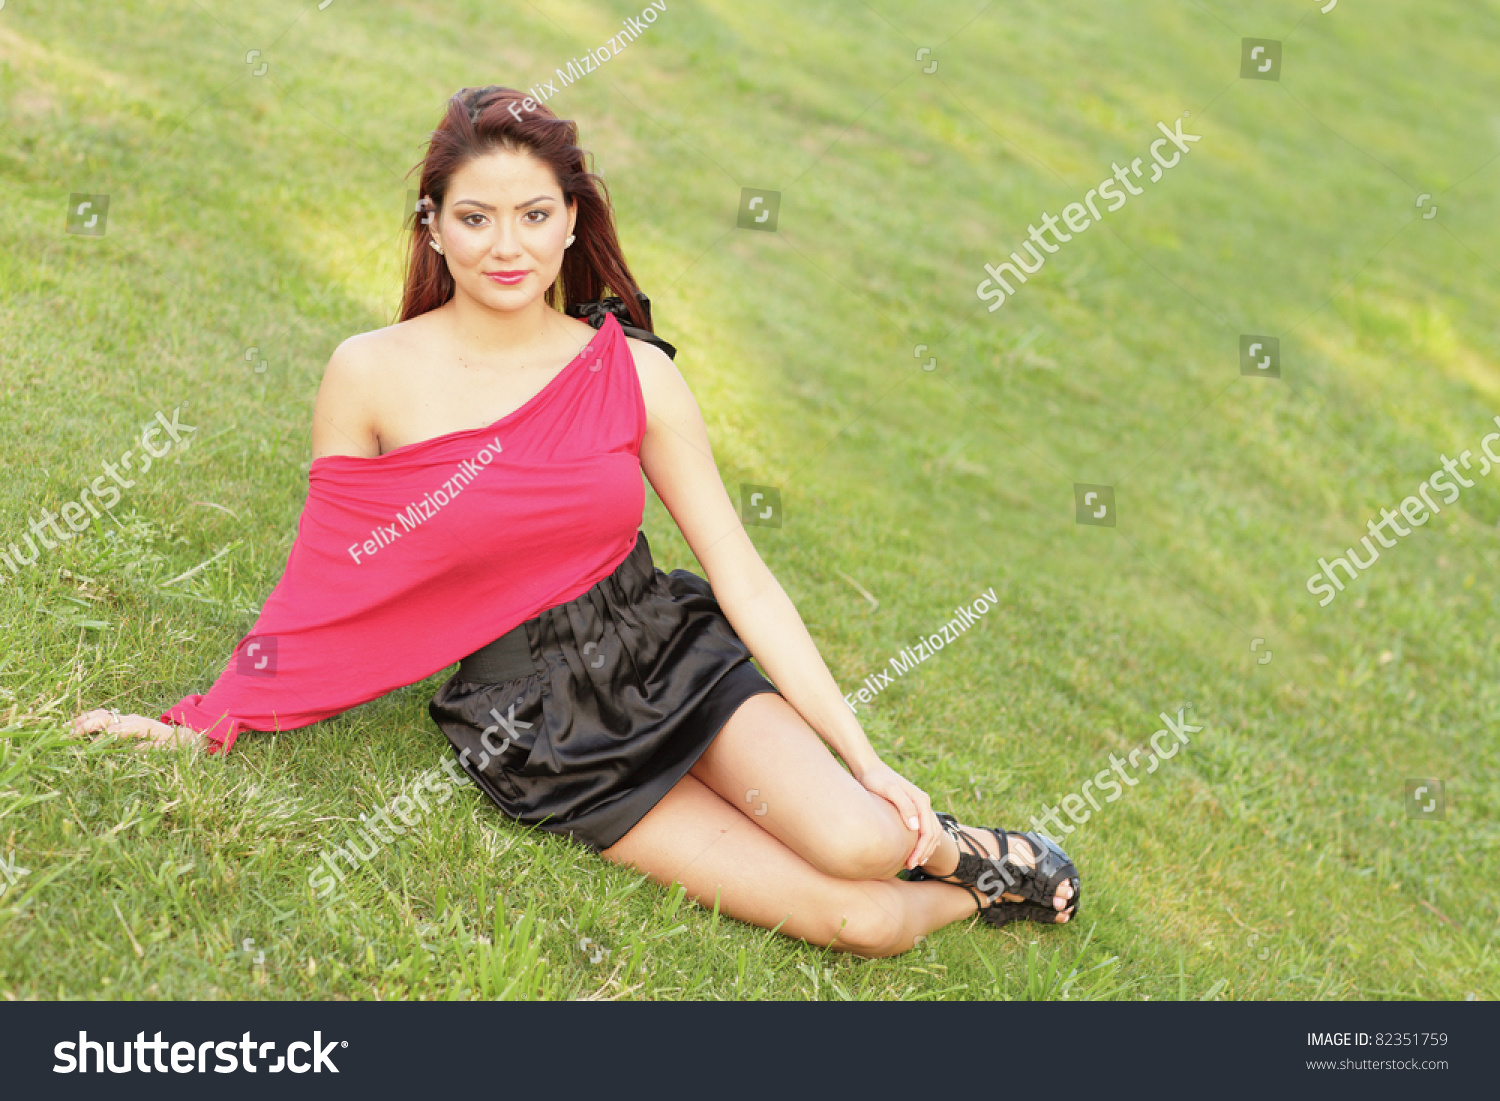 Grass in erotic woman Dog fuck